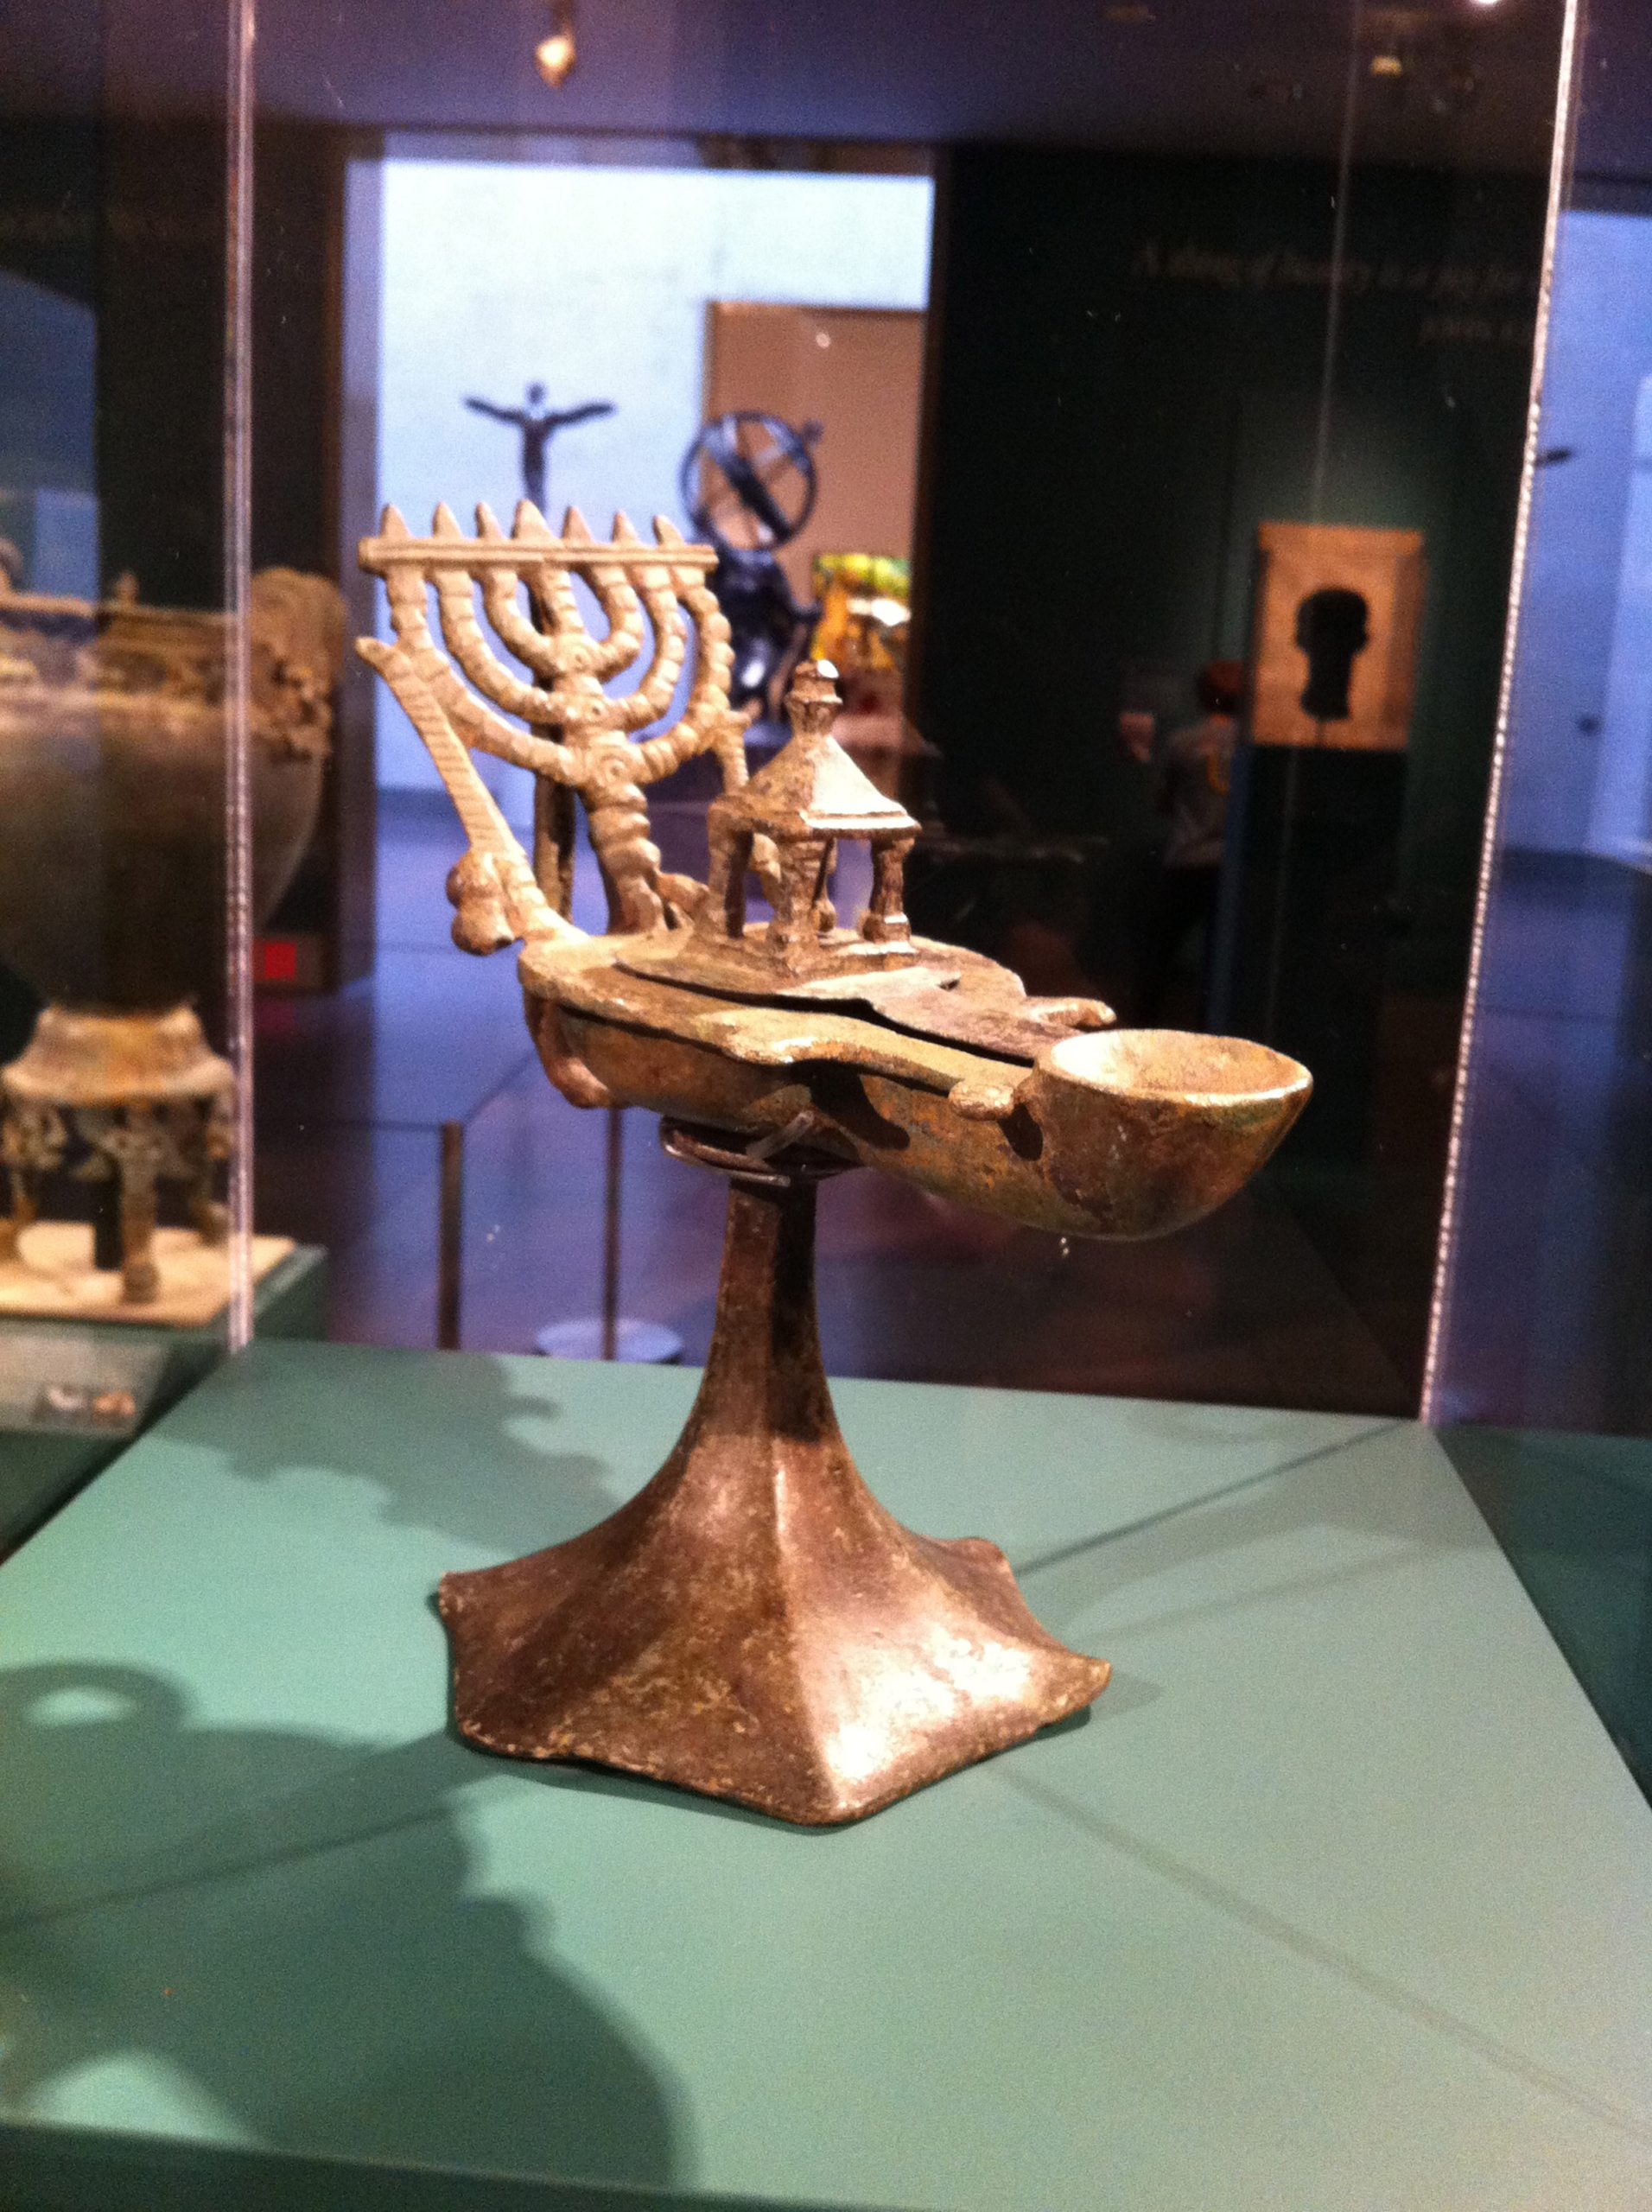 Judaic Oil Lamp, 5th-6th Century CE, Museum of Fine Arts, Houston. Photo: Asa Mittman, CC BY-NC-SA 2.0.